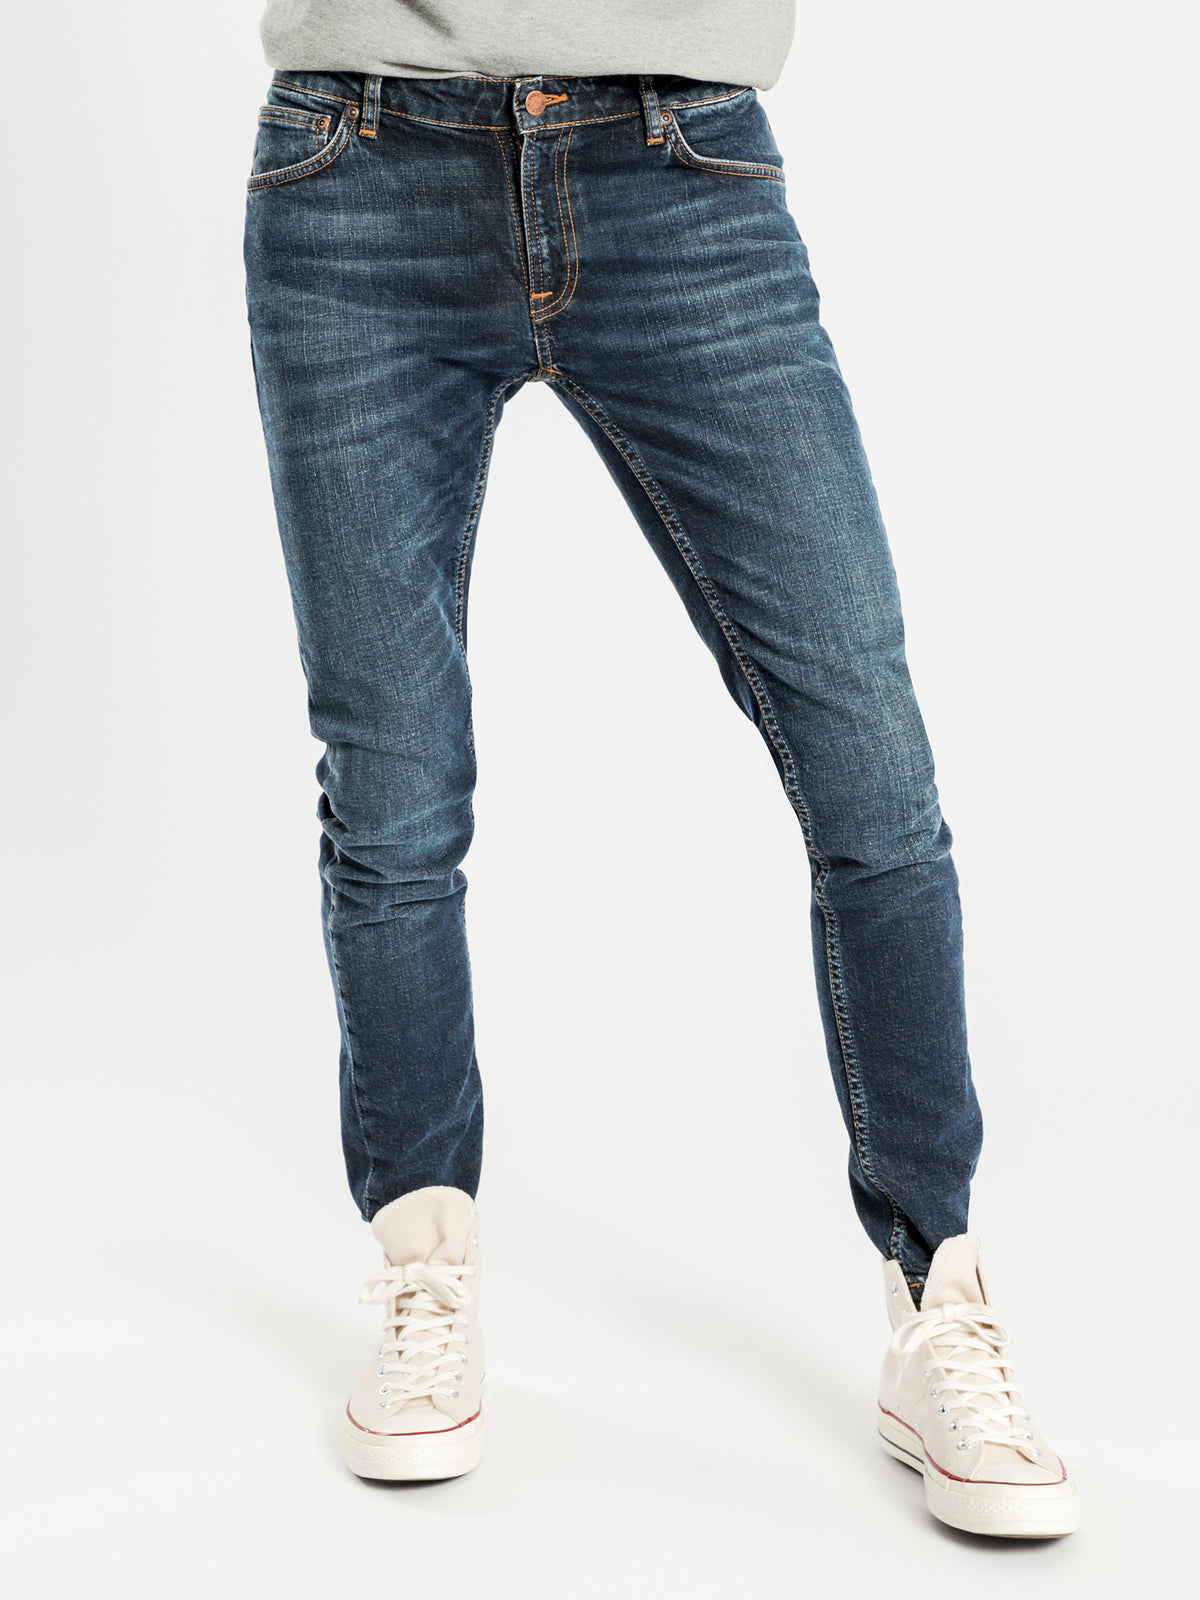 Skinny Lin Jeans in West Coast Worn Denim